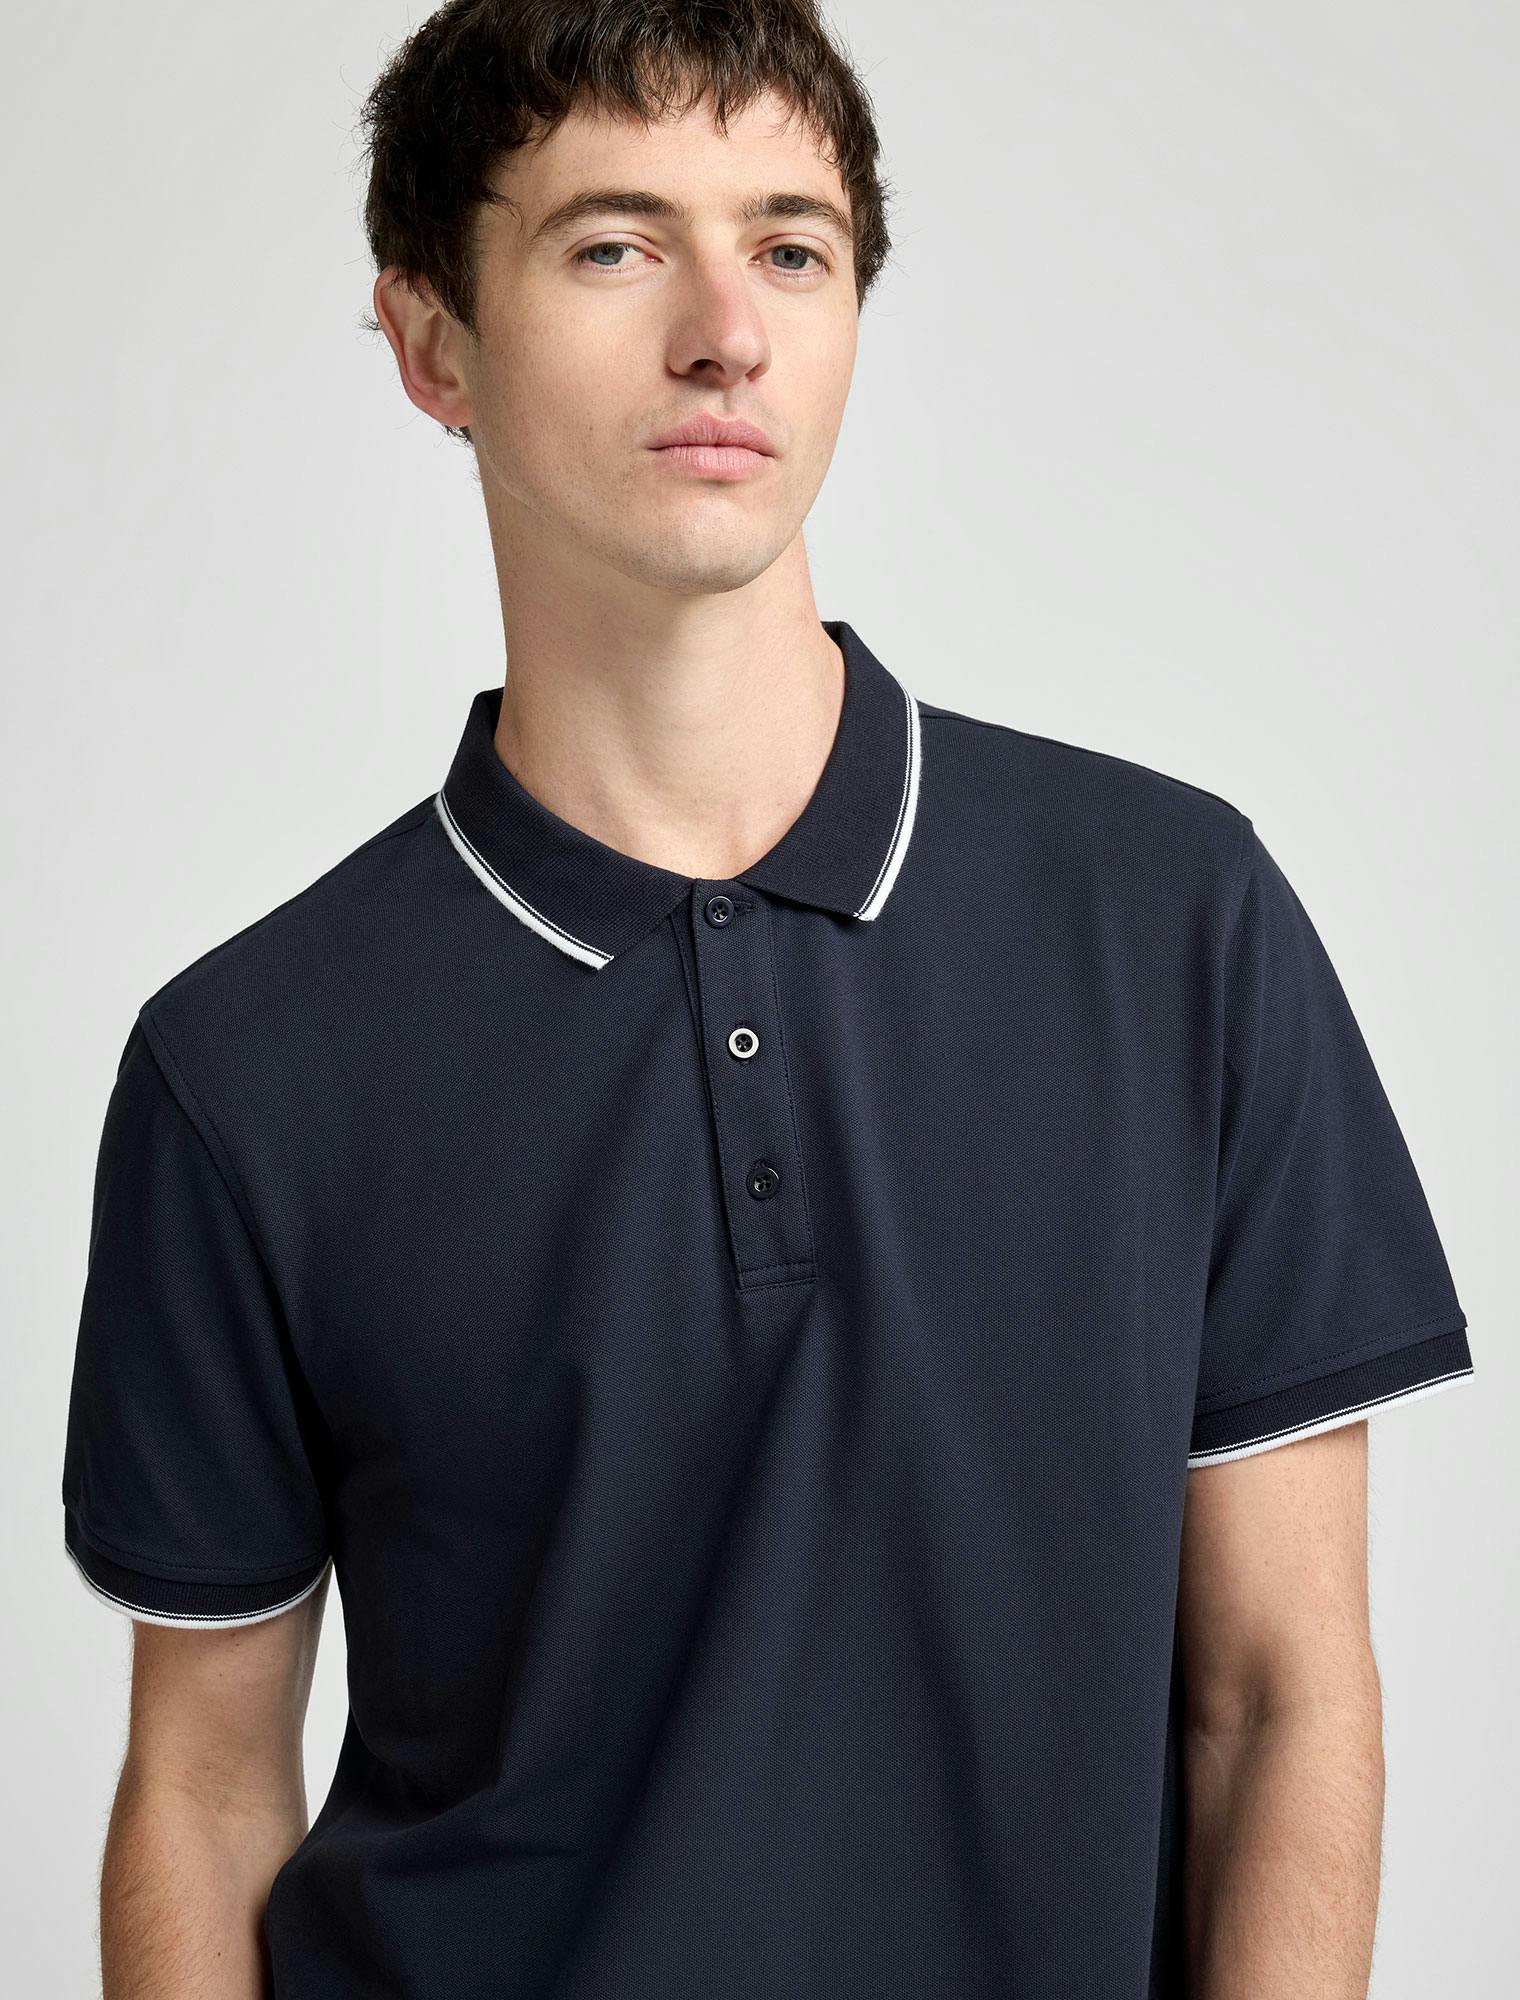 Men's Louie Polo Shirt - Navy Blue with White Stripe